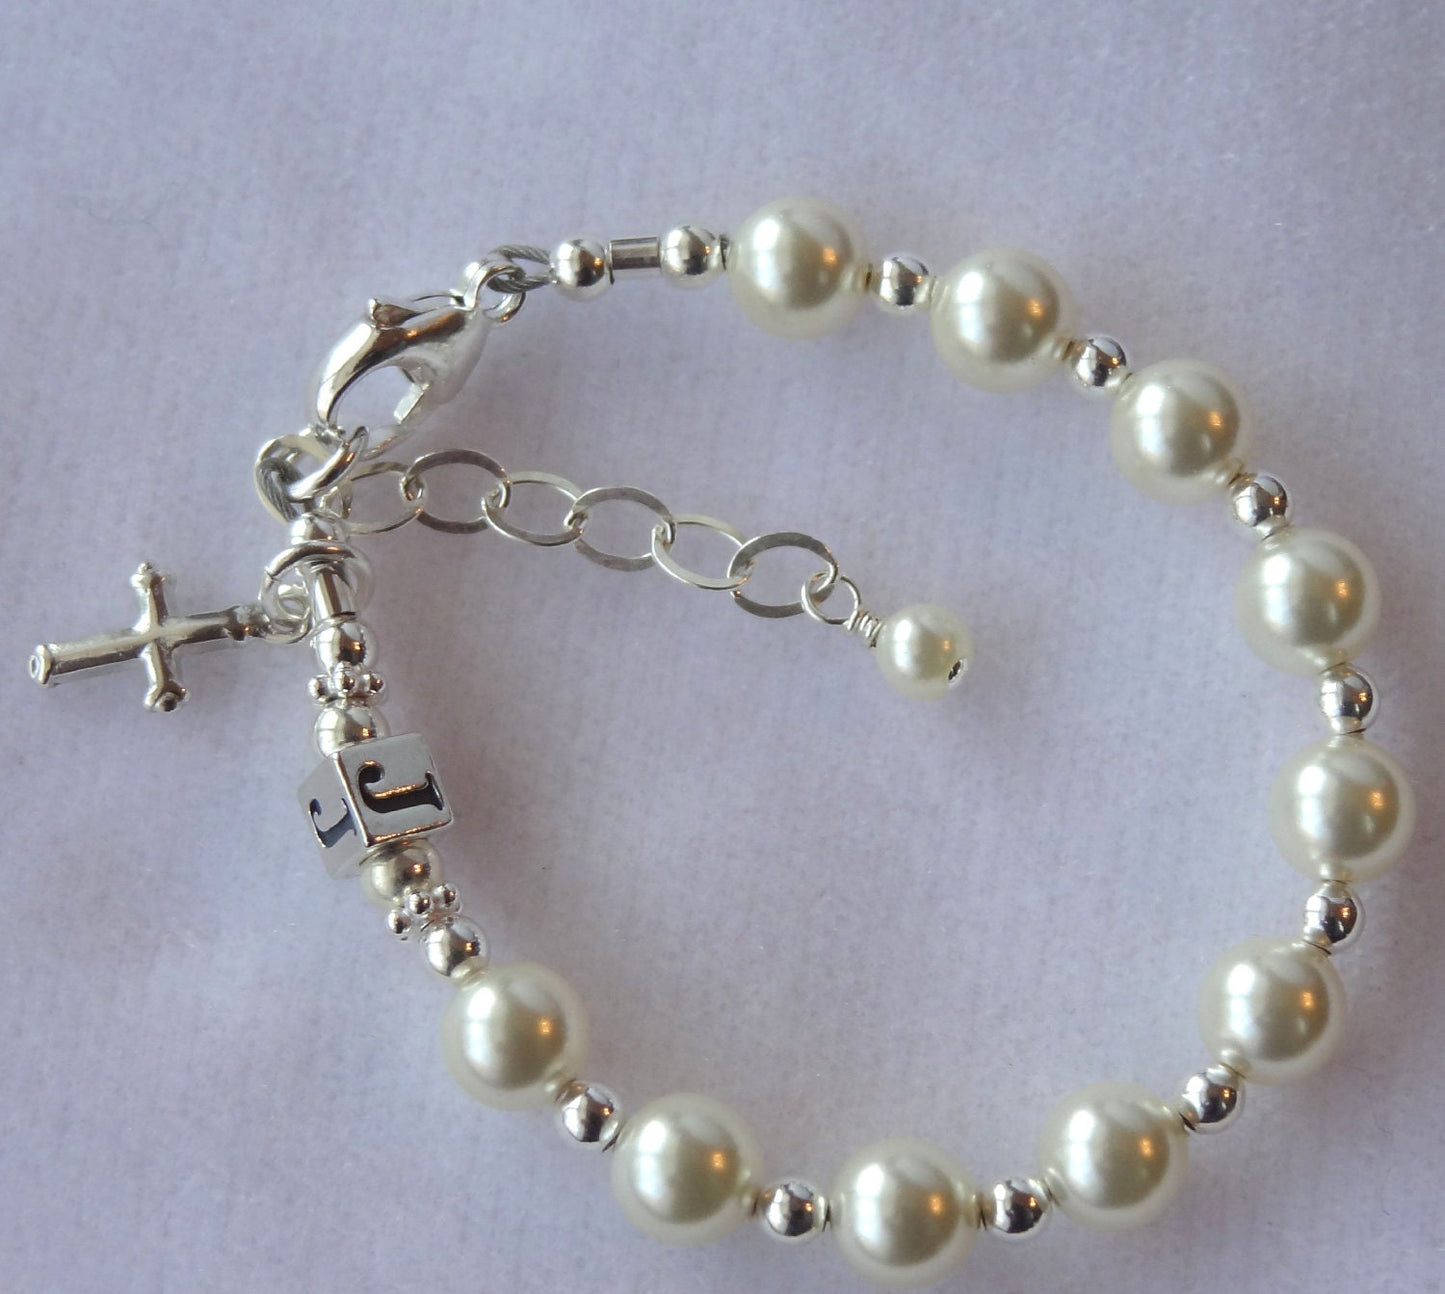 Baptism to Bride Bracelet,Personalized Real Pearl Sideways Cross Rosary Bracelet,Baby Baptism Bracelet,First Communion Confirmation Bracelet